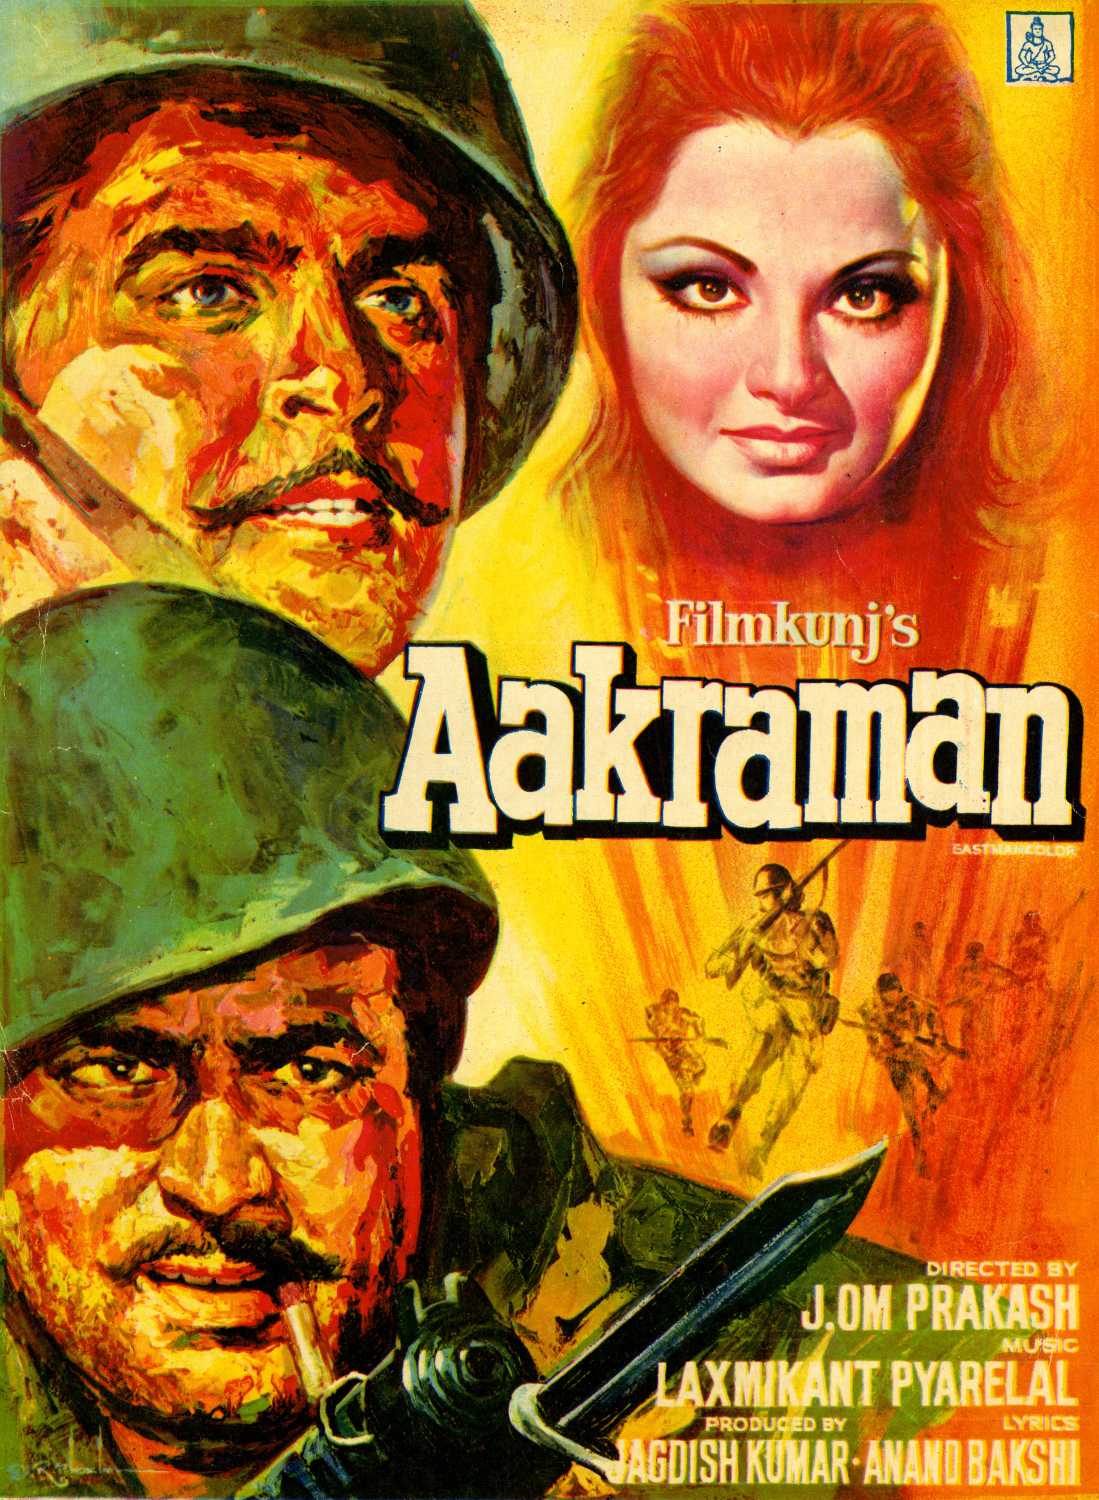 Aakraman 1975 6261 Poster.jpg